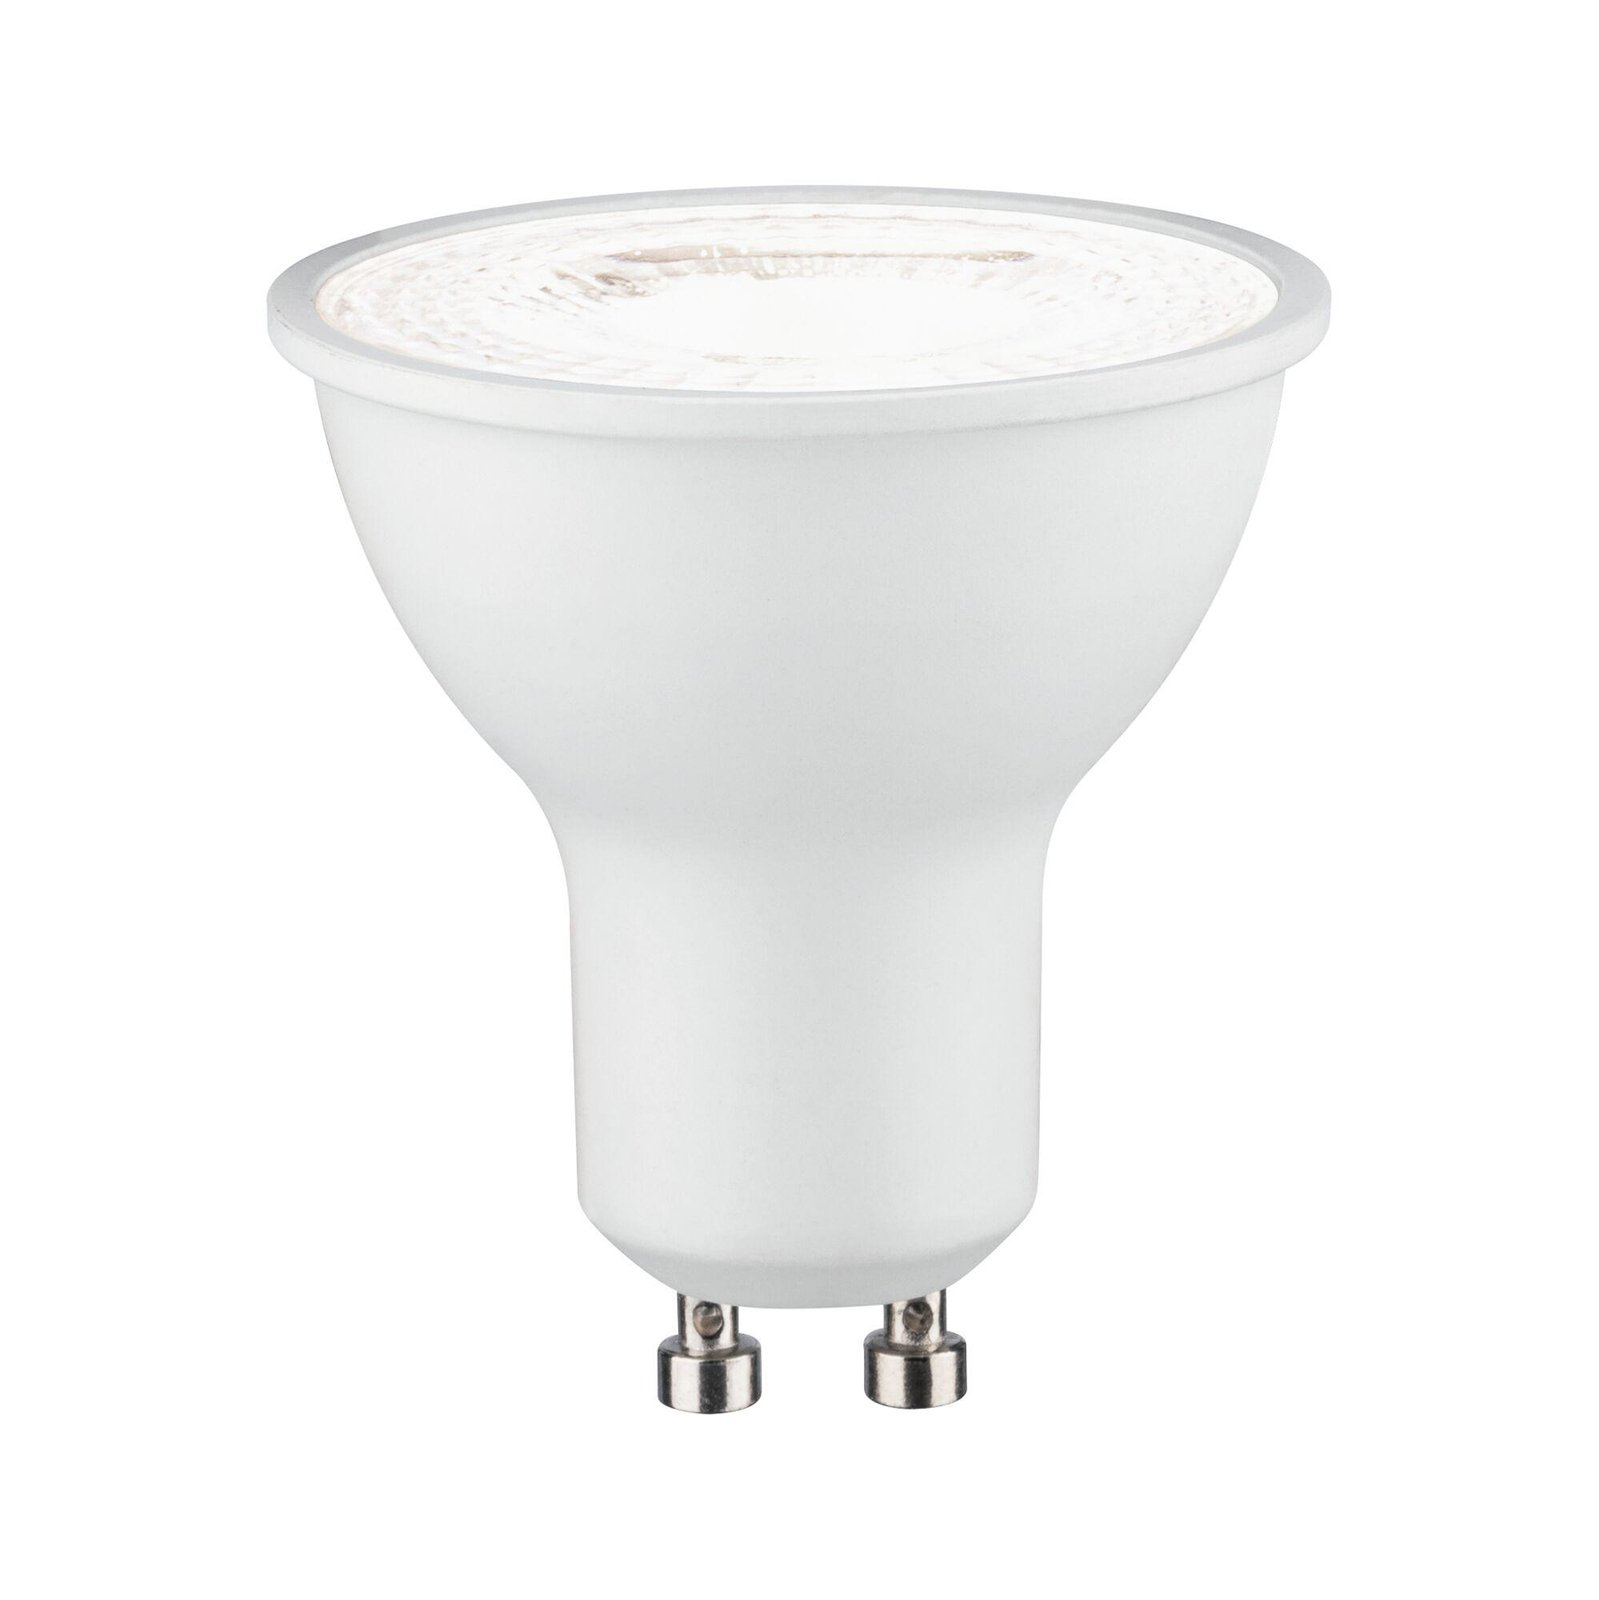 Paulmann LED bulb 4,000 K white GU10 8 W dimmable 36°